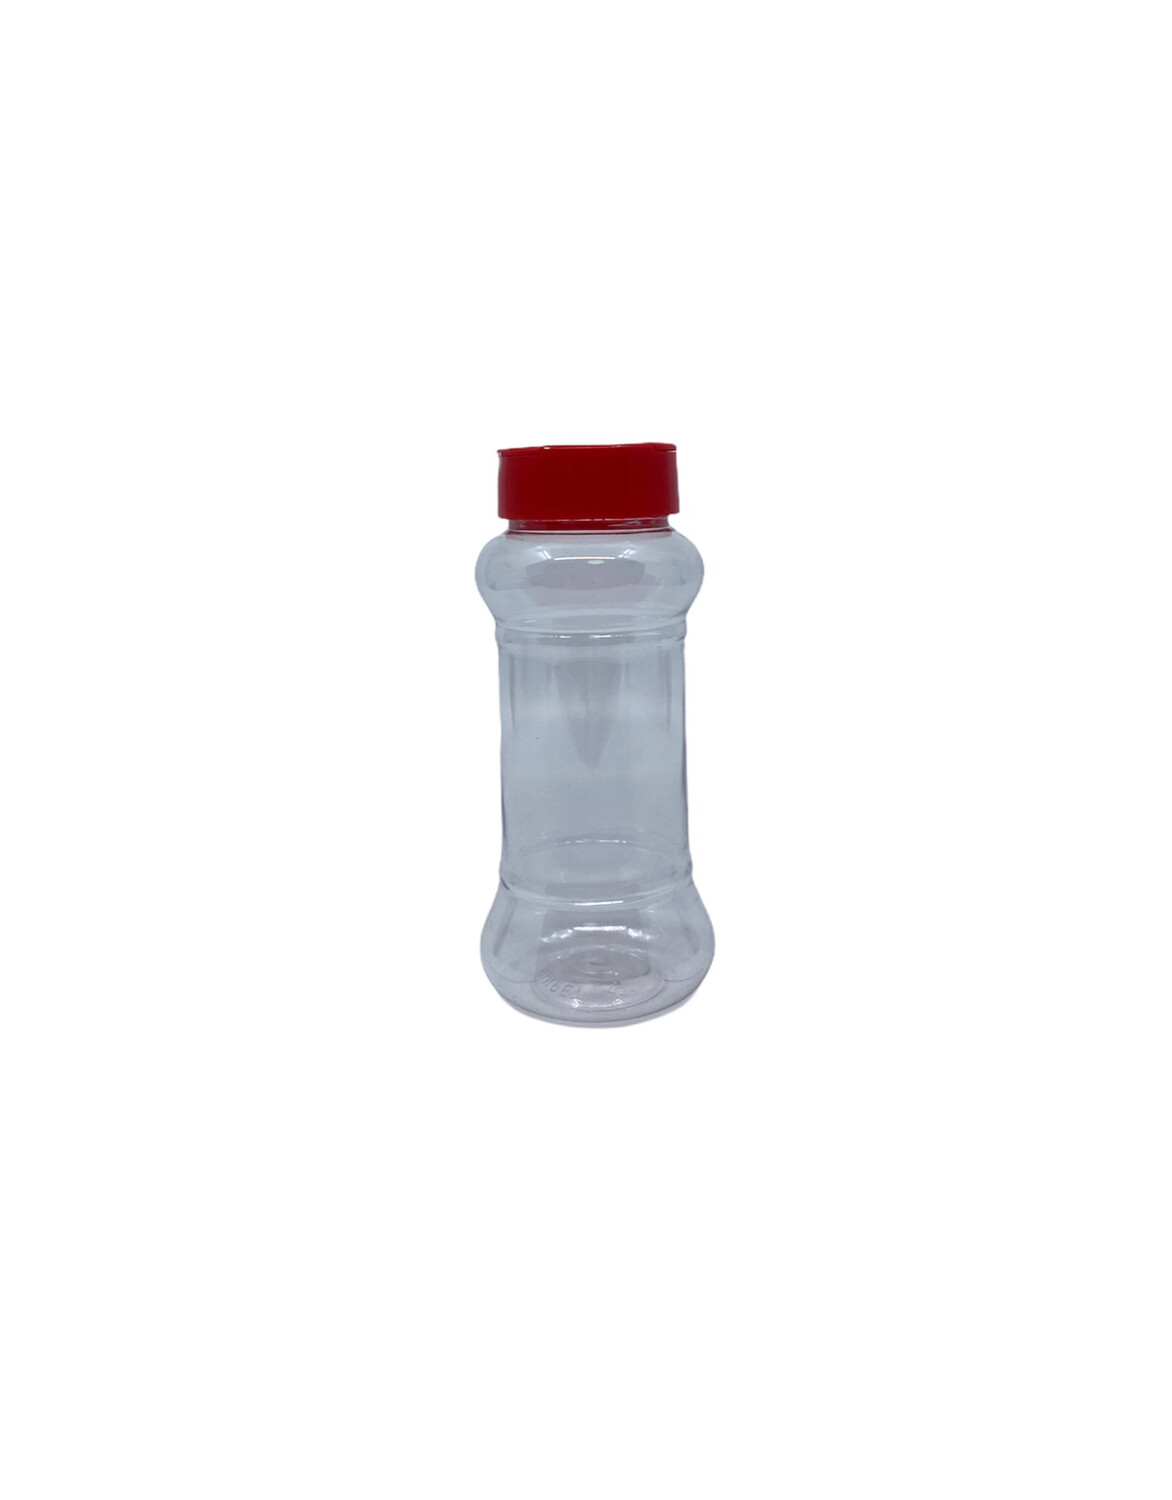 200ml Round PET Plastic Spice Jar - Red